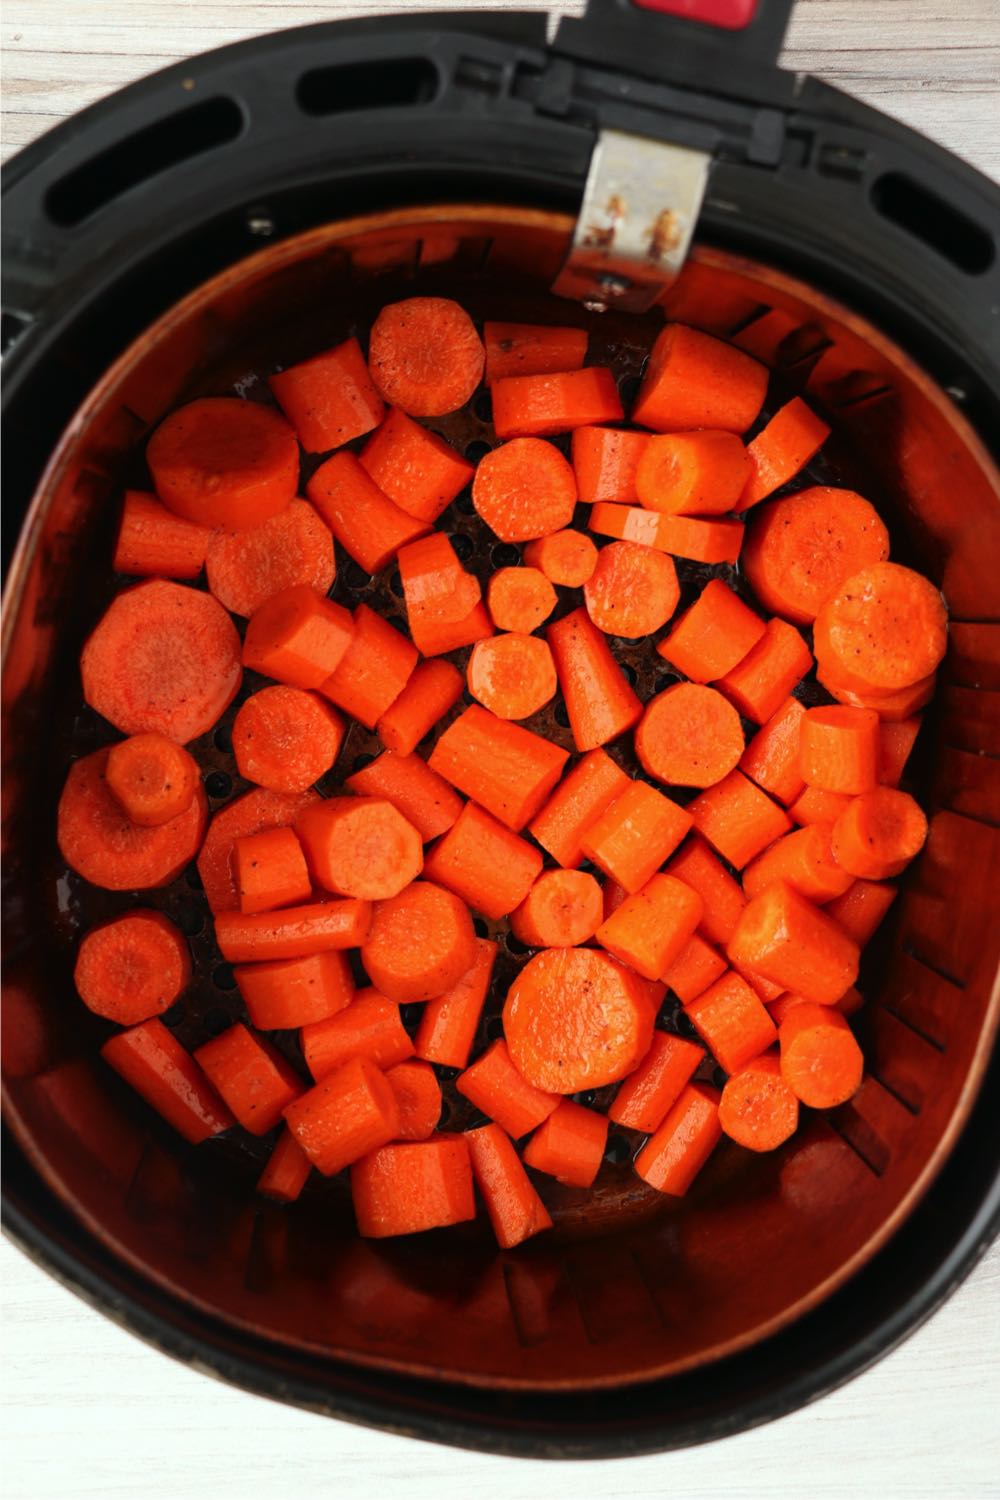 Chopped carrots in air fryer basket